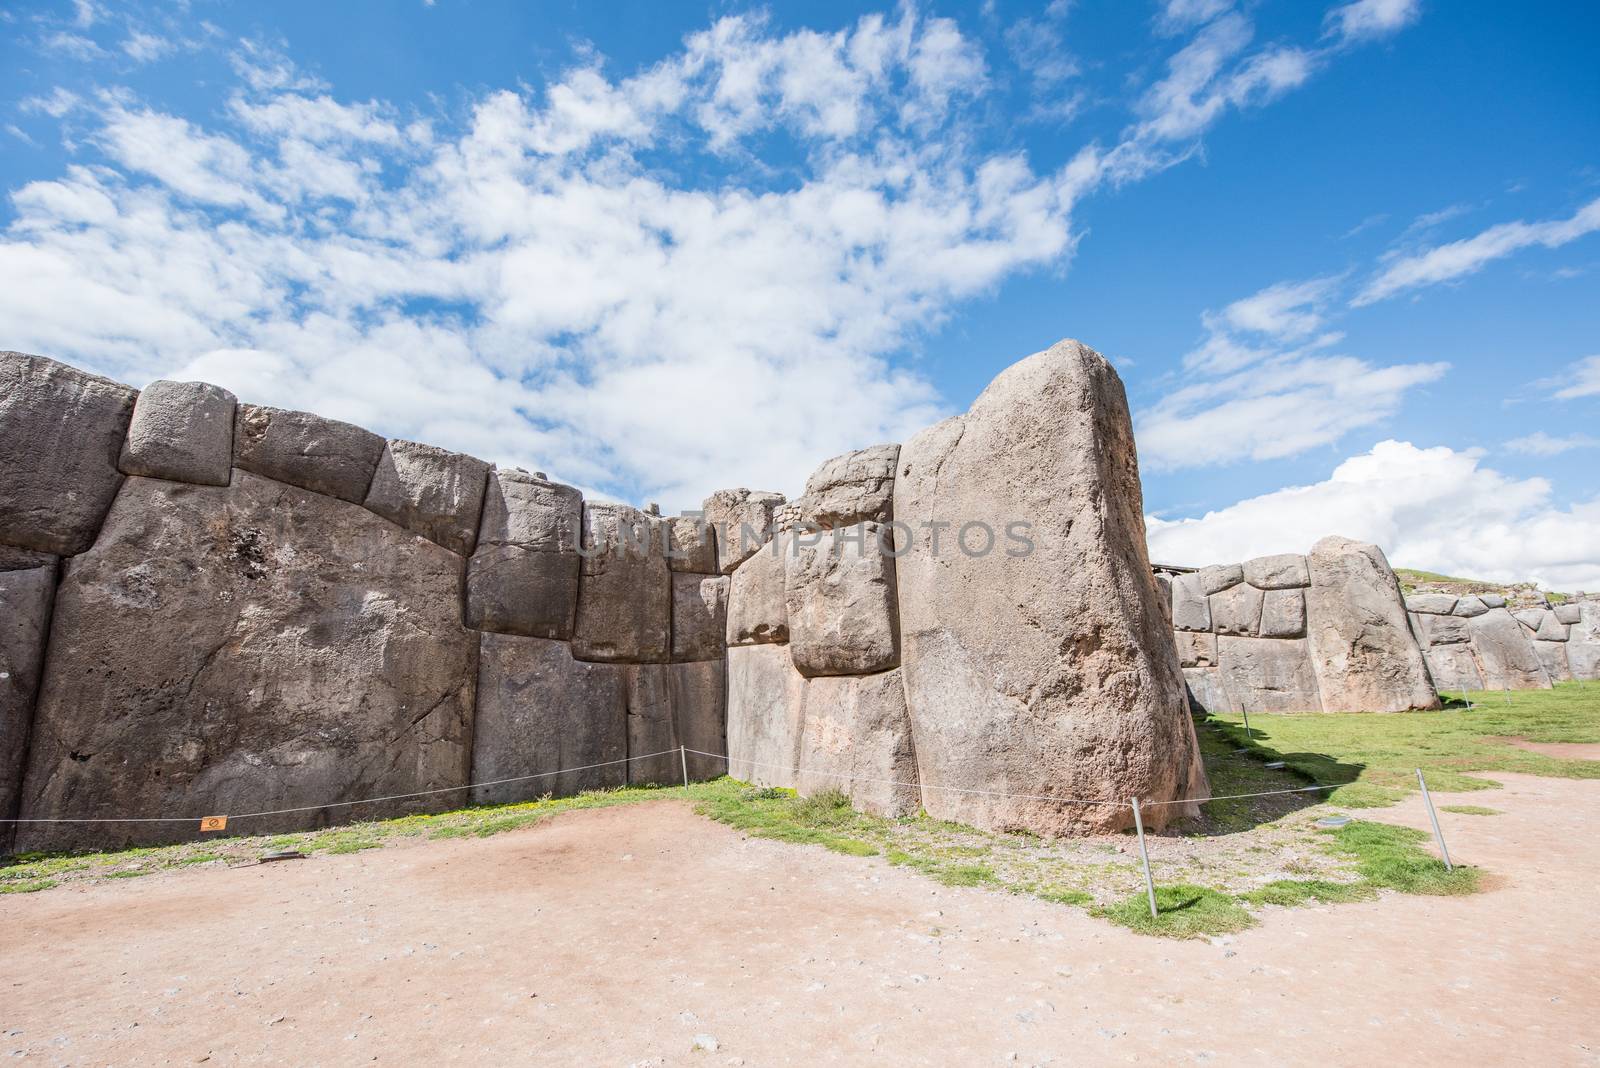 Saksaywaman, Inca ruins in Cusco, Peru by rayints